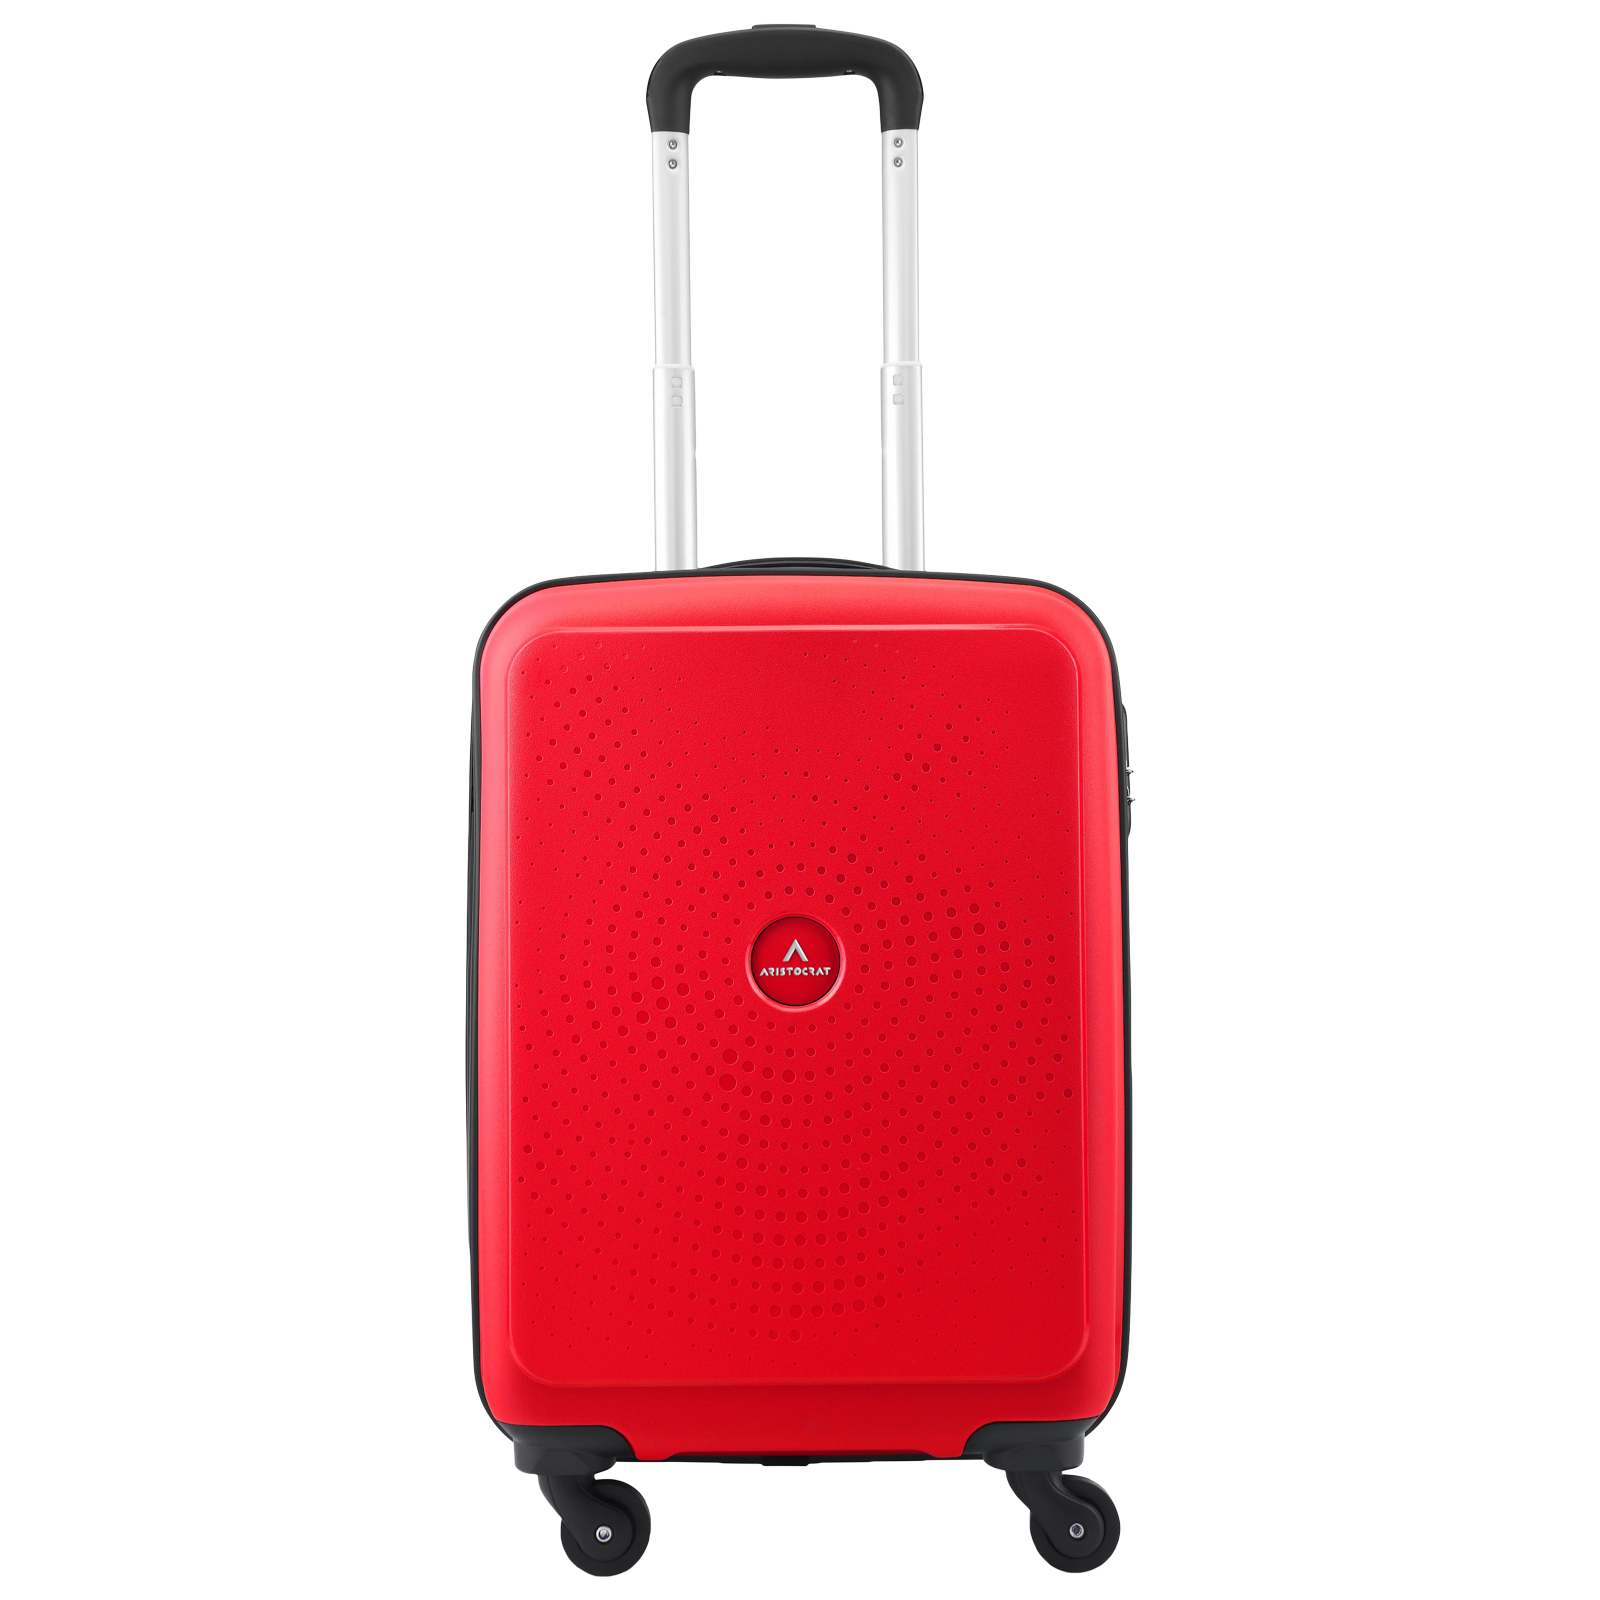 ARISTOCRAT Luggage Trolley Bag (Hard Case, BRIGAD55FIR, Red)